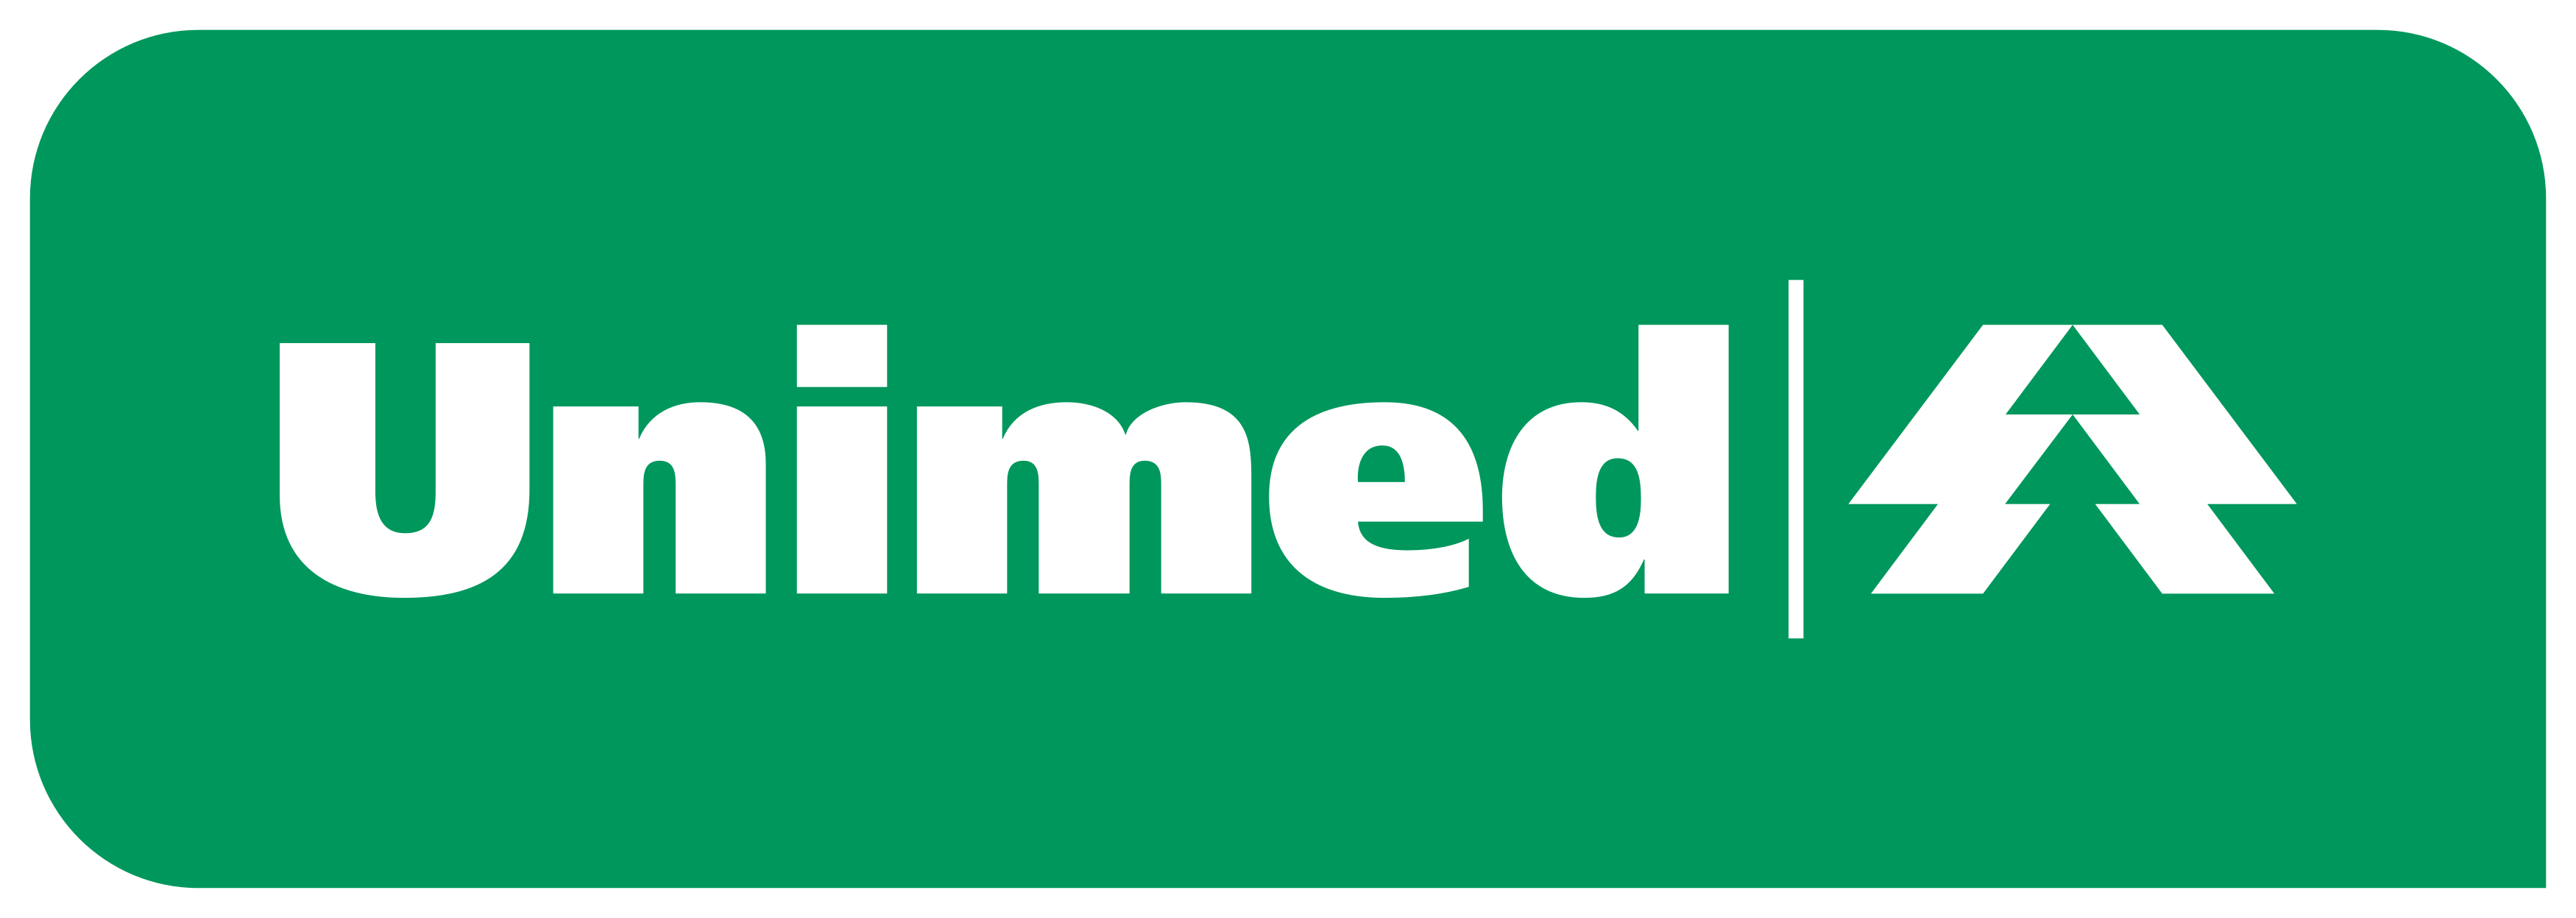 unimed-logo-1.png